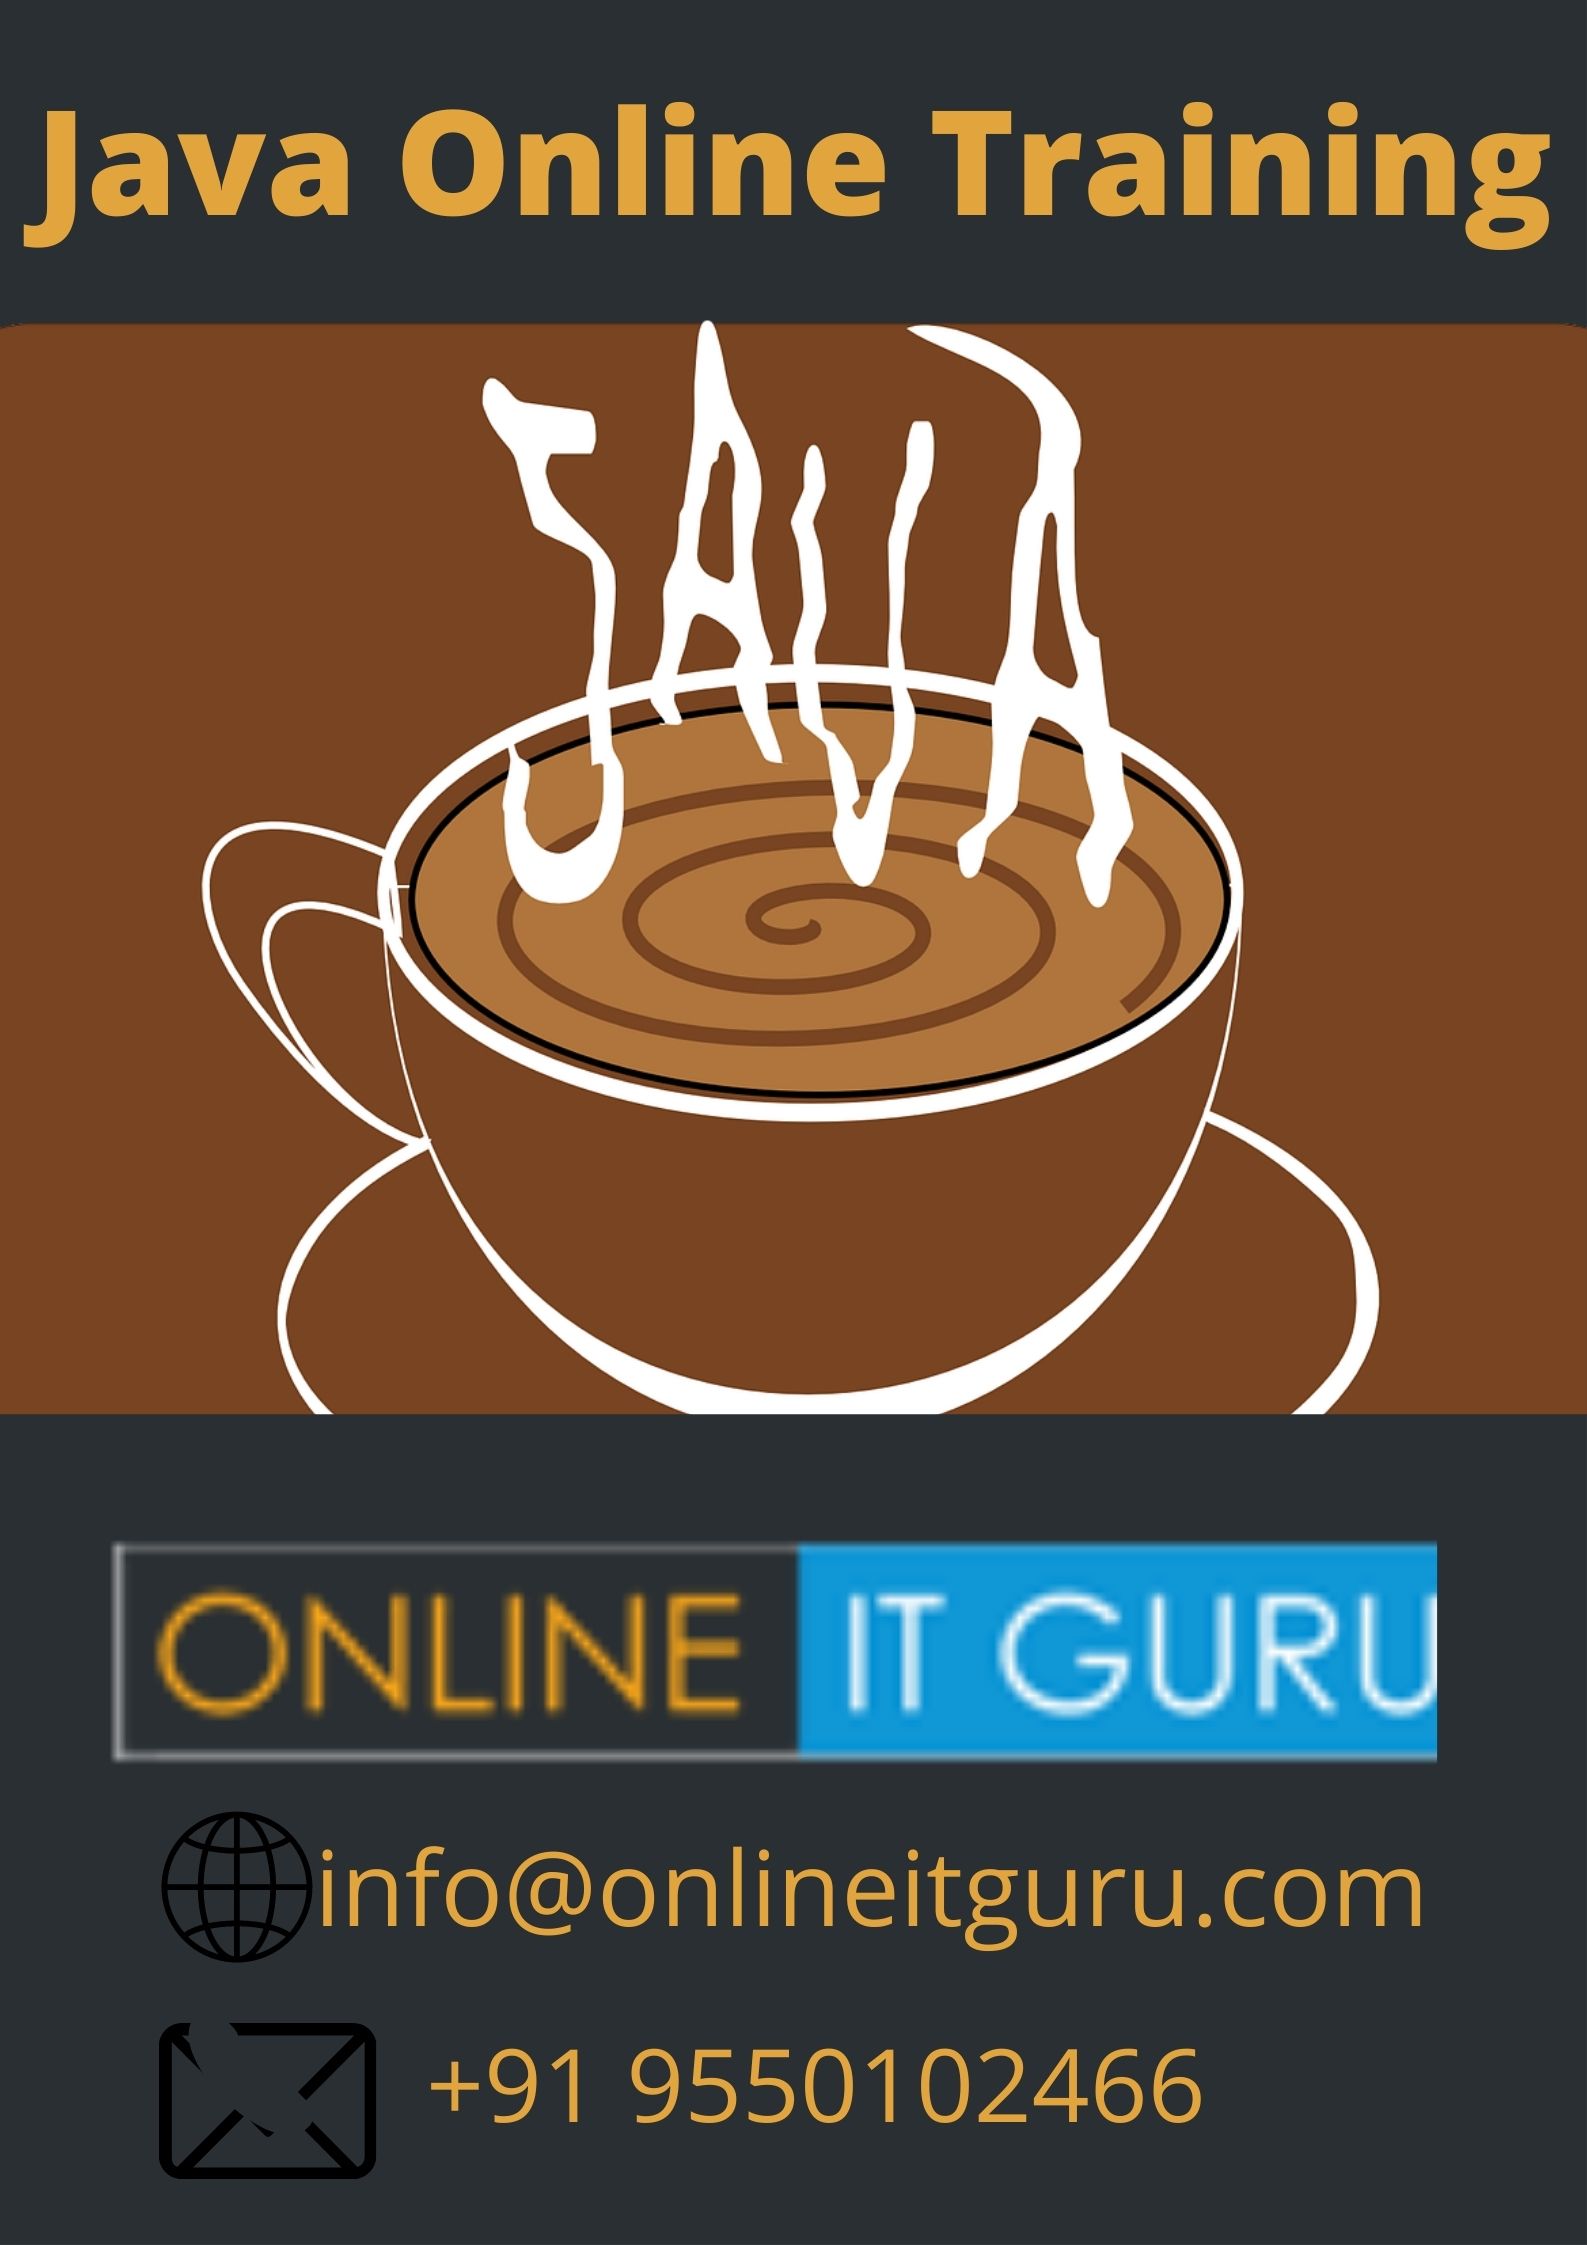 Java online training india | Java Training, Online Event